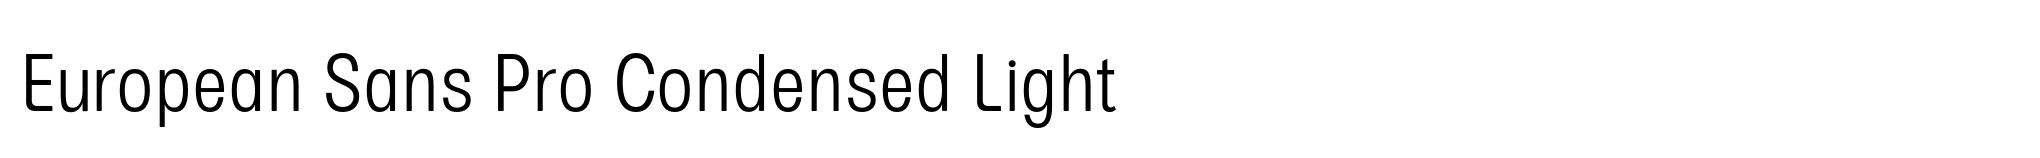 European Sans Pro Condensed Light image